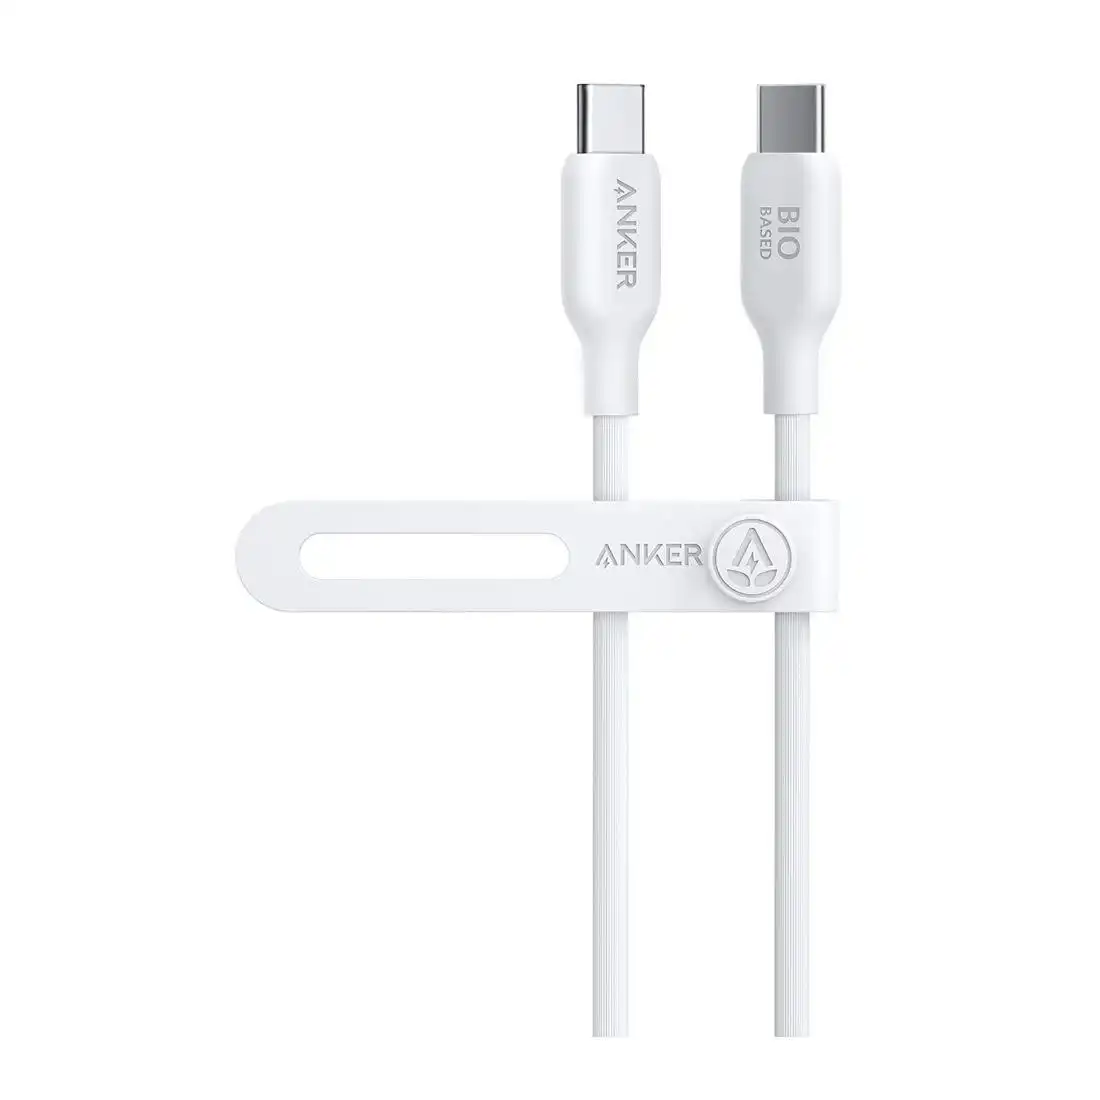 Anker 541 USB-C to Lightning Cable (Bio-Based 3ft) - White